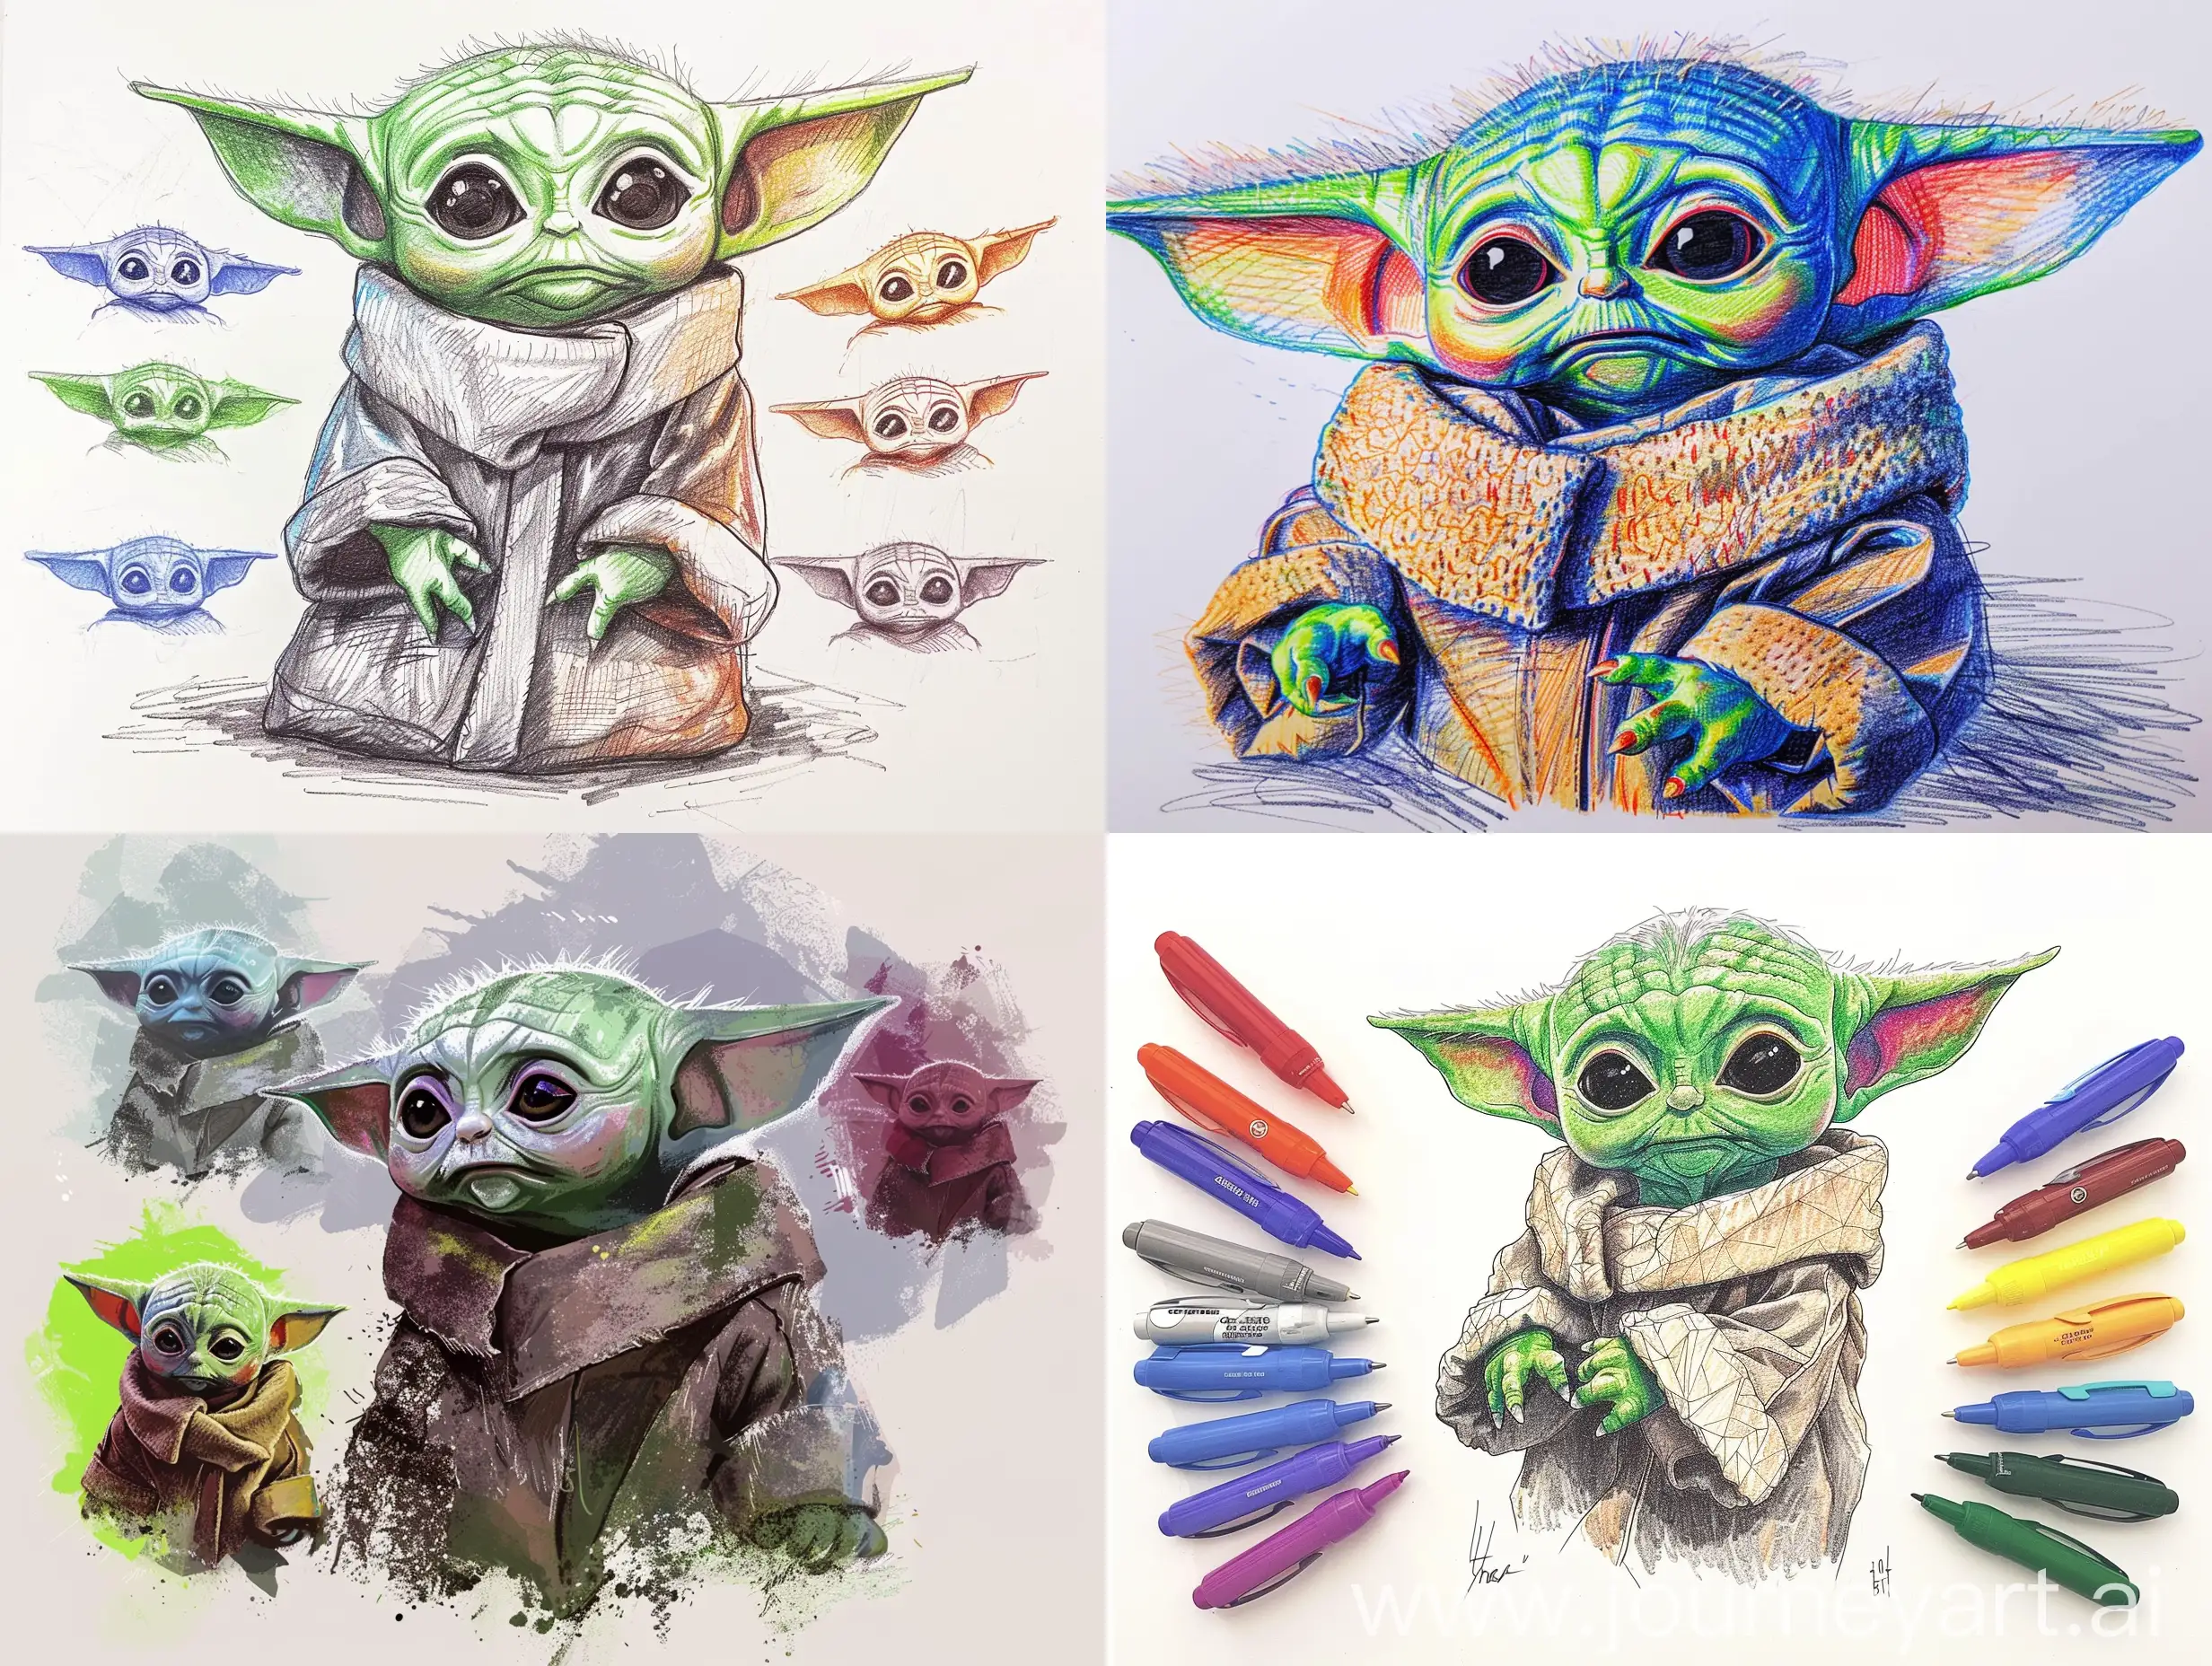 Adorable-Baby-Yoda-Pen-Sketch-in-Vibrant-Colors